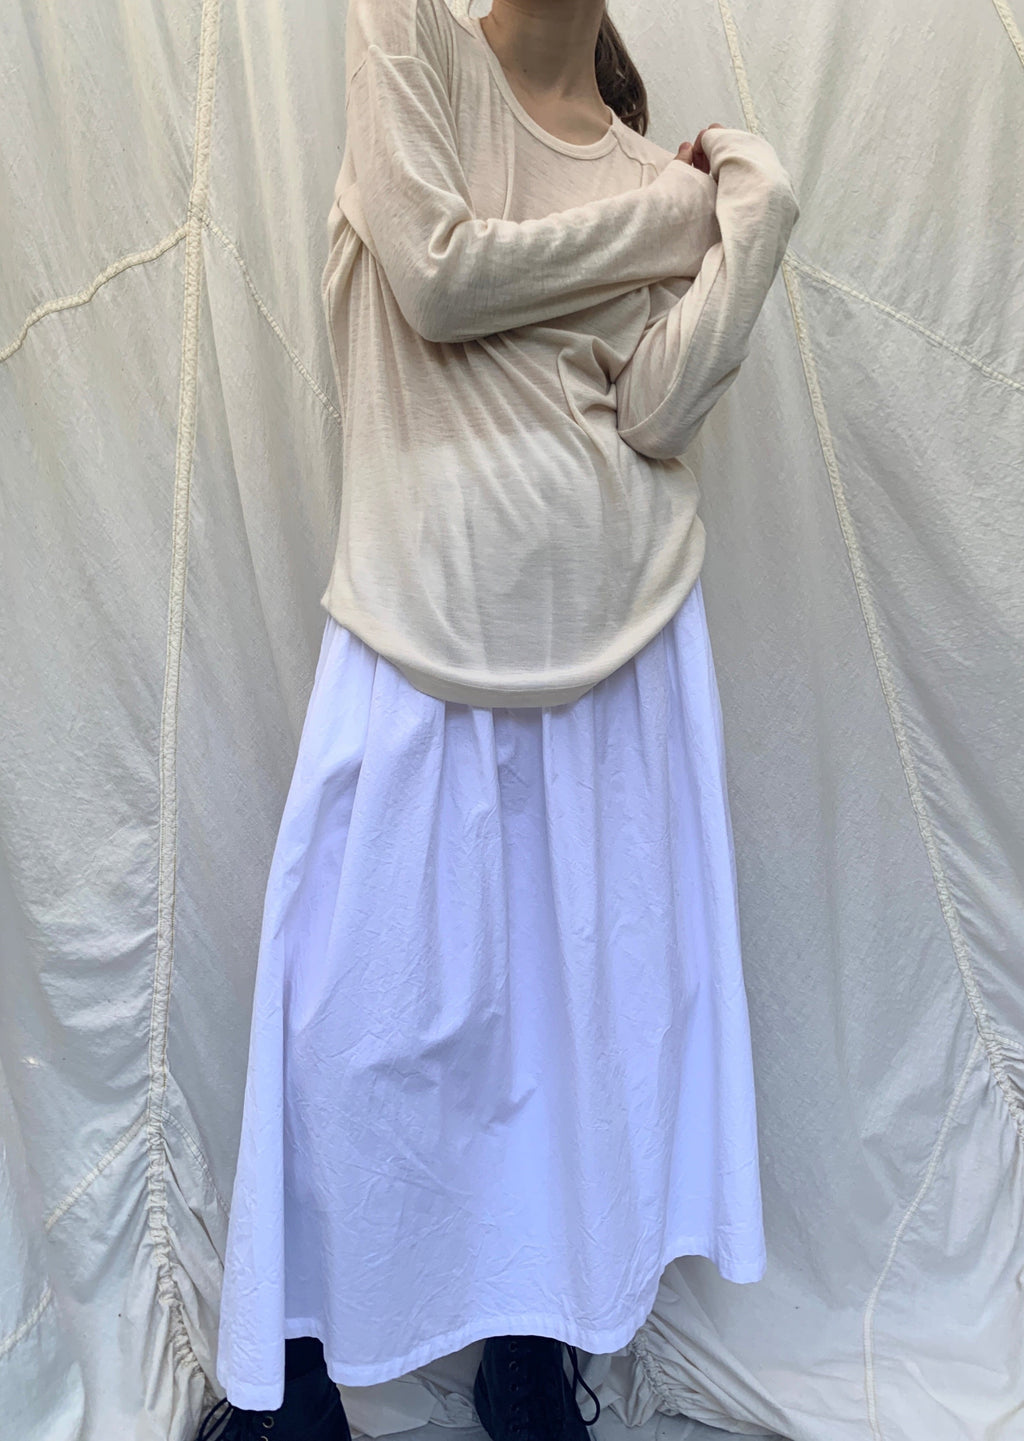 SKYE Skirt | White Cotton